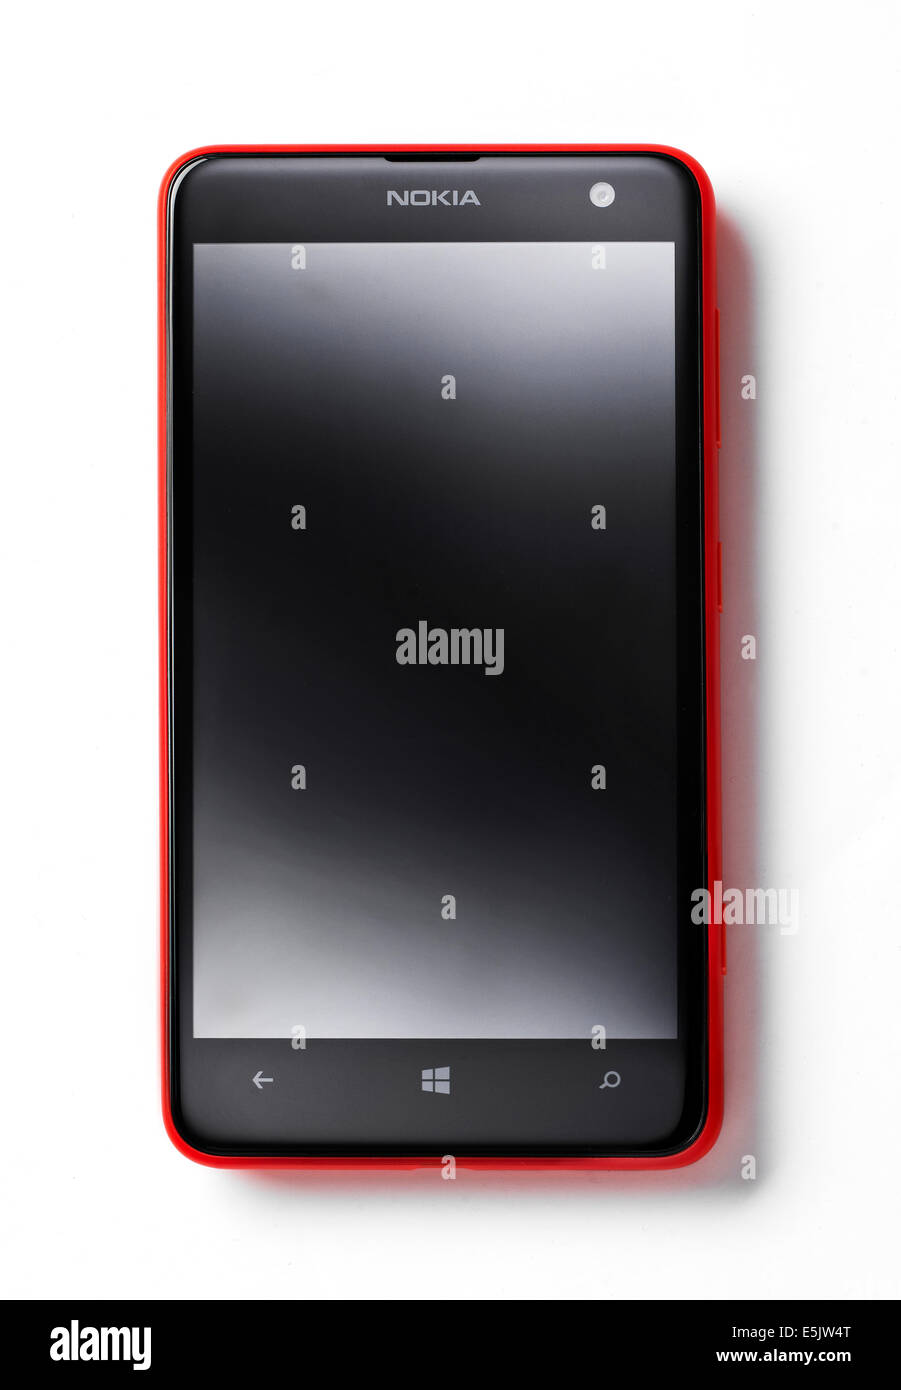 Nokia smart phone Stock Photo